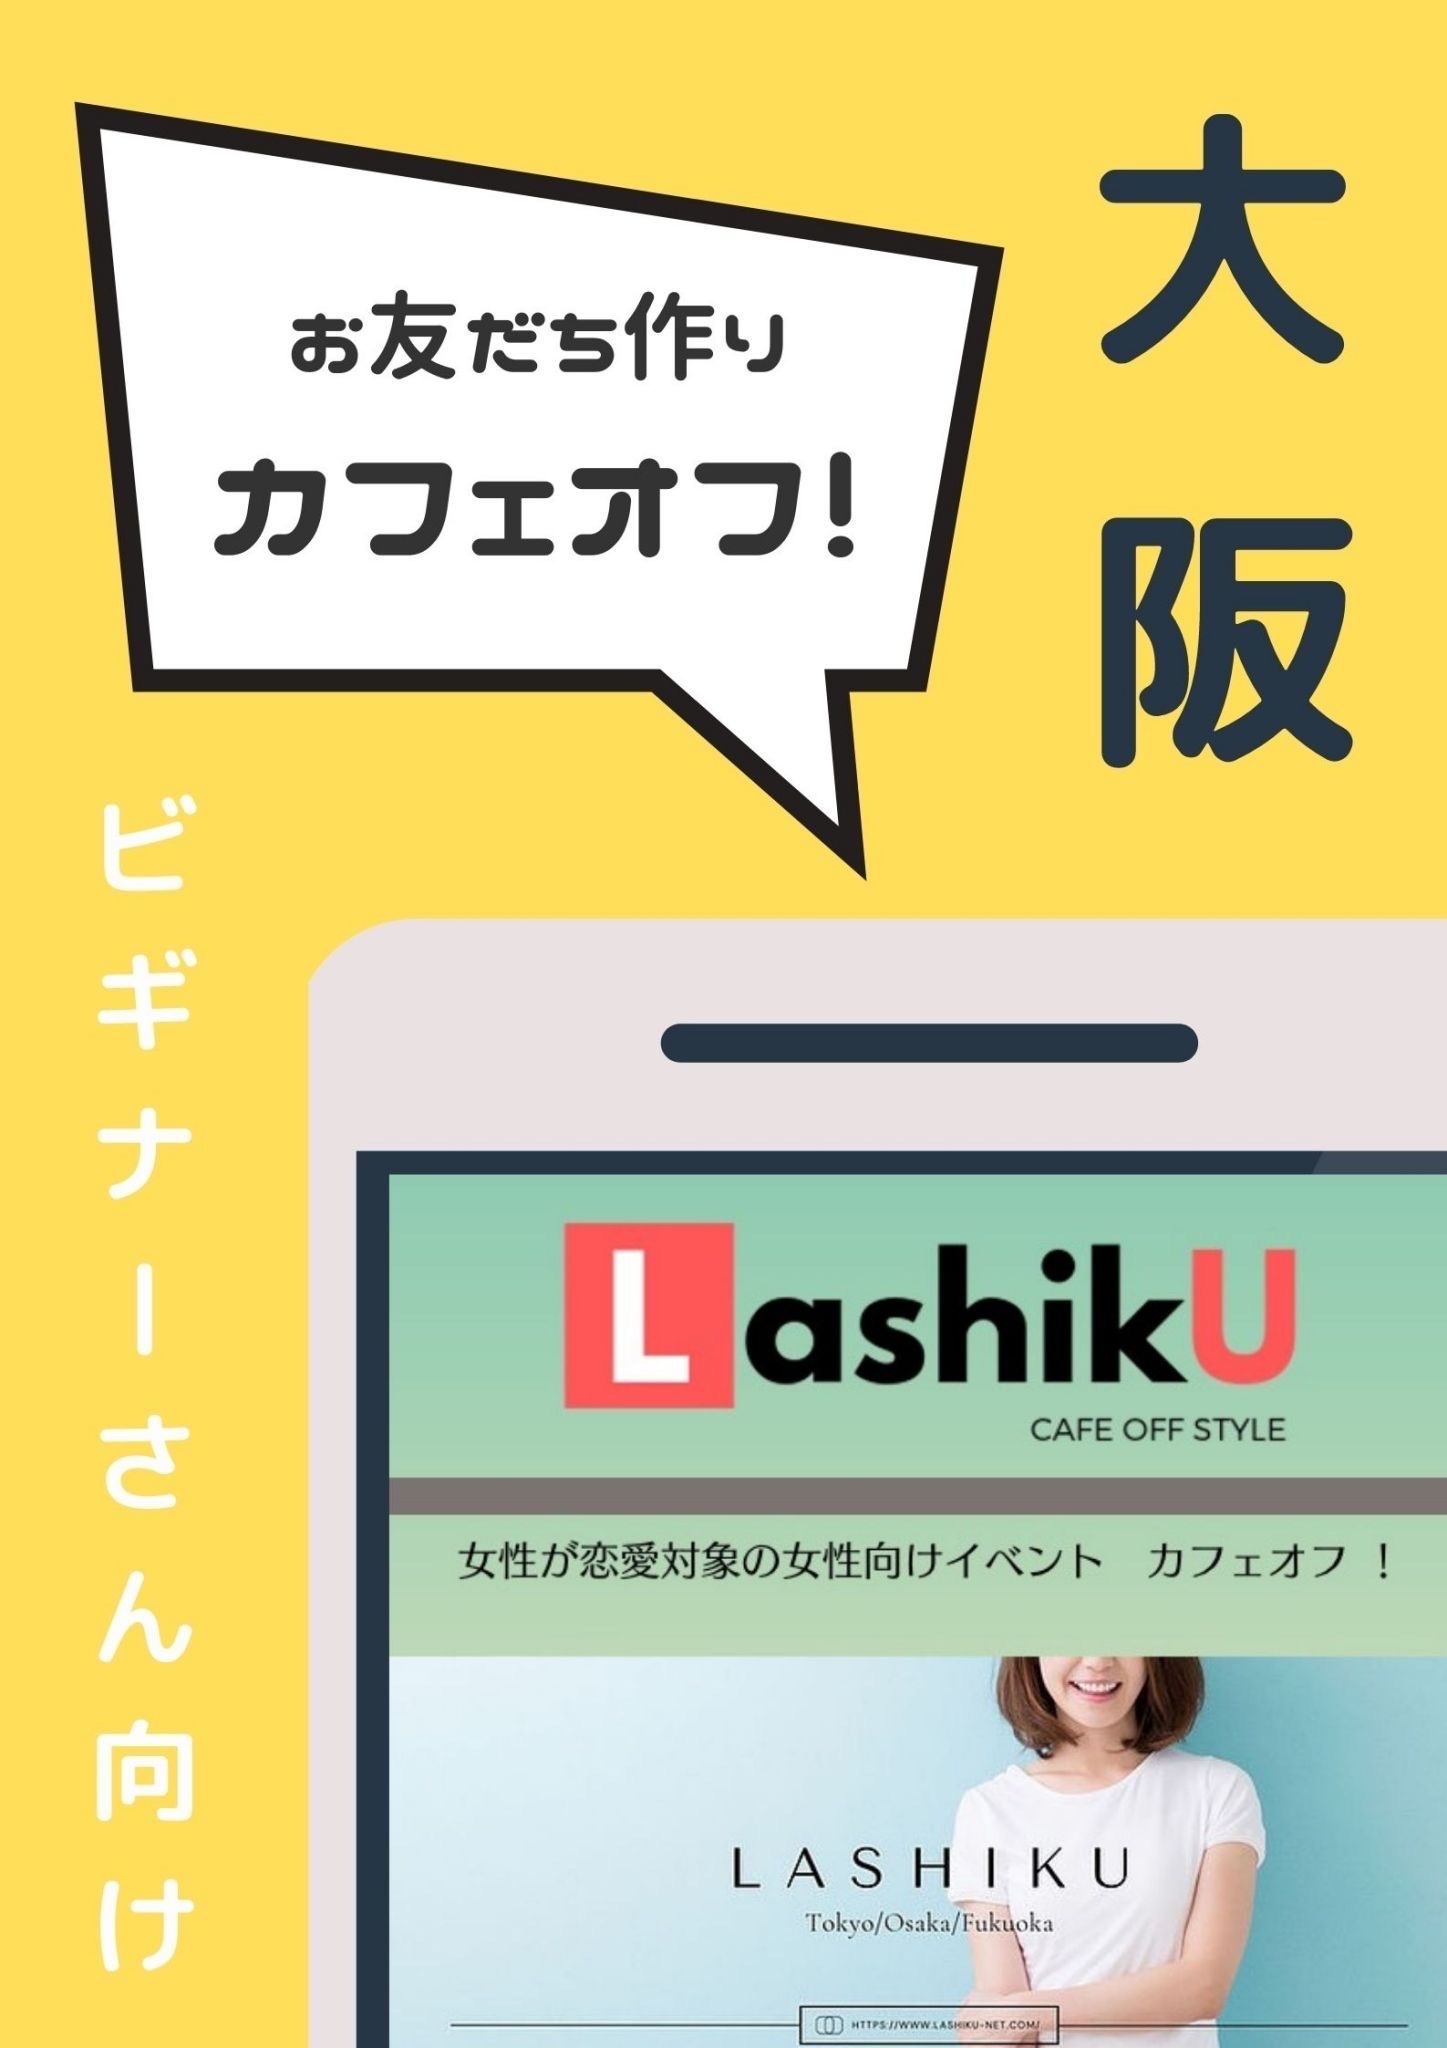 【LashikU】女性との恋愛初心者さん向けお友達作りカフェオフ＠大阪